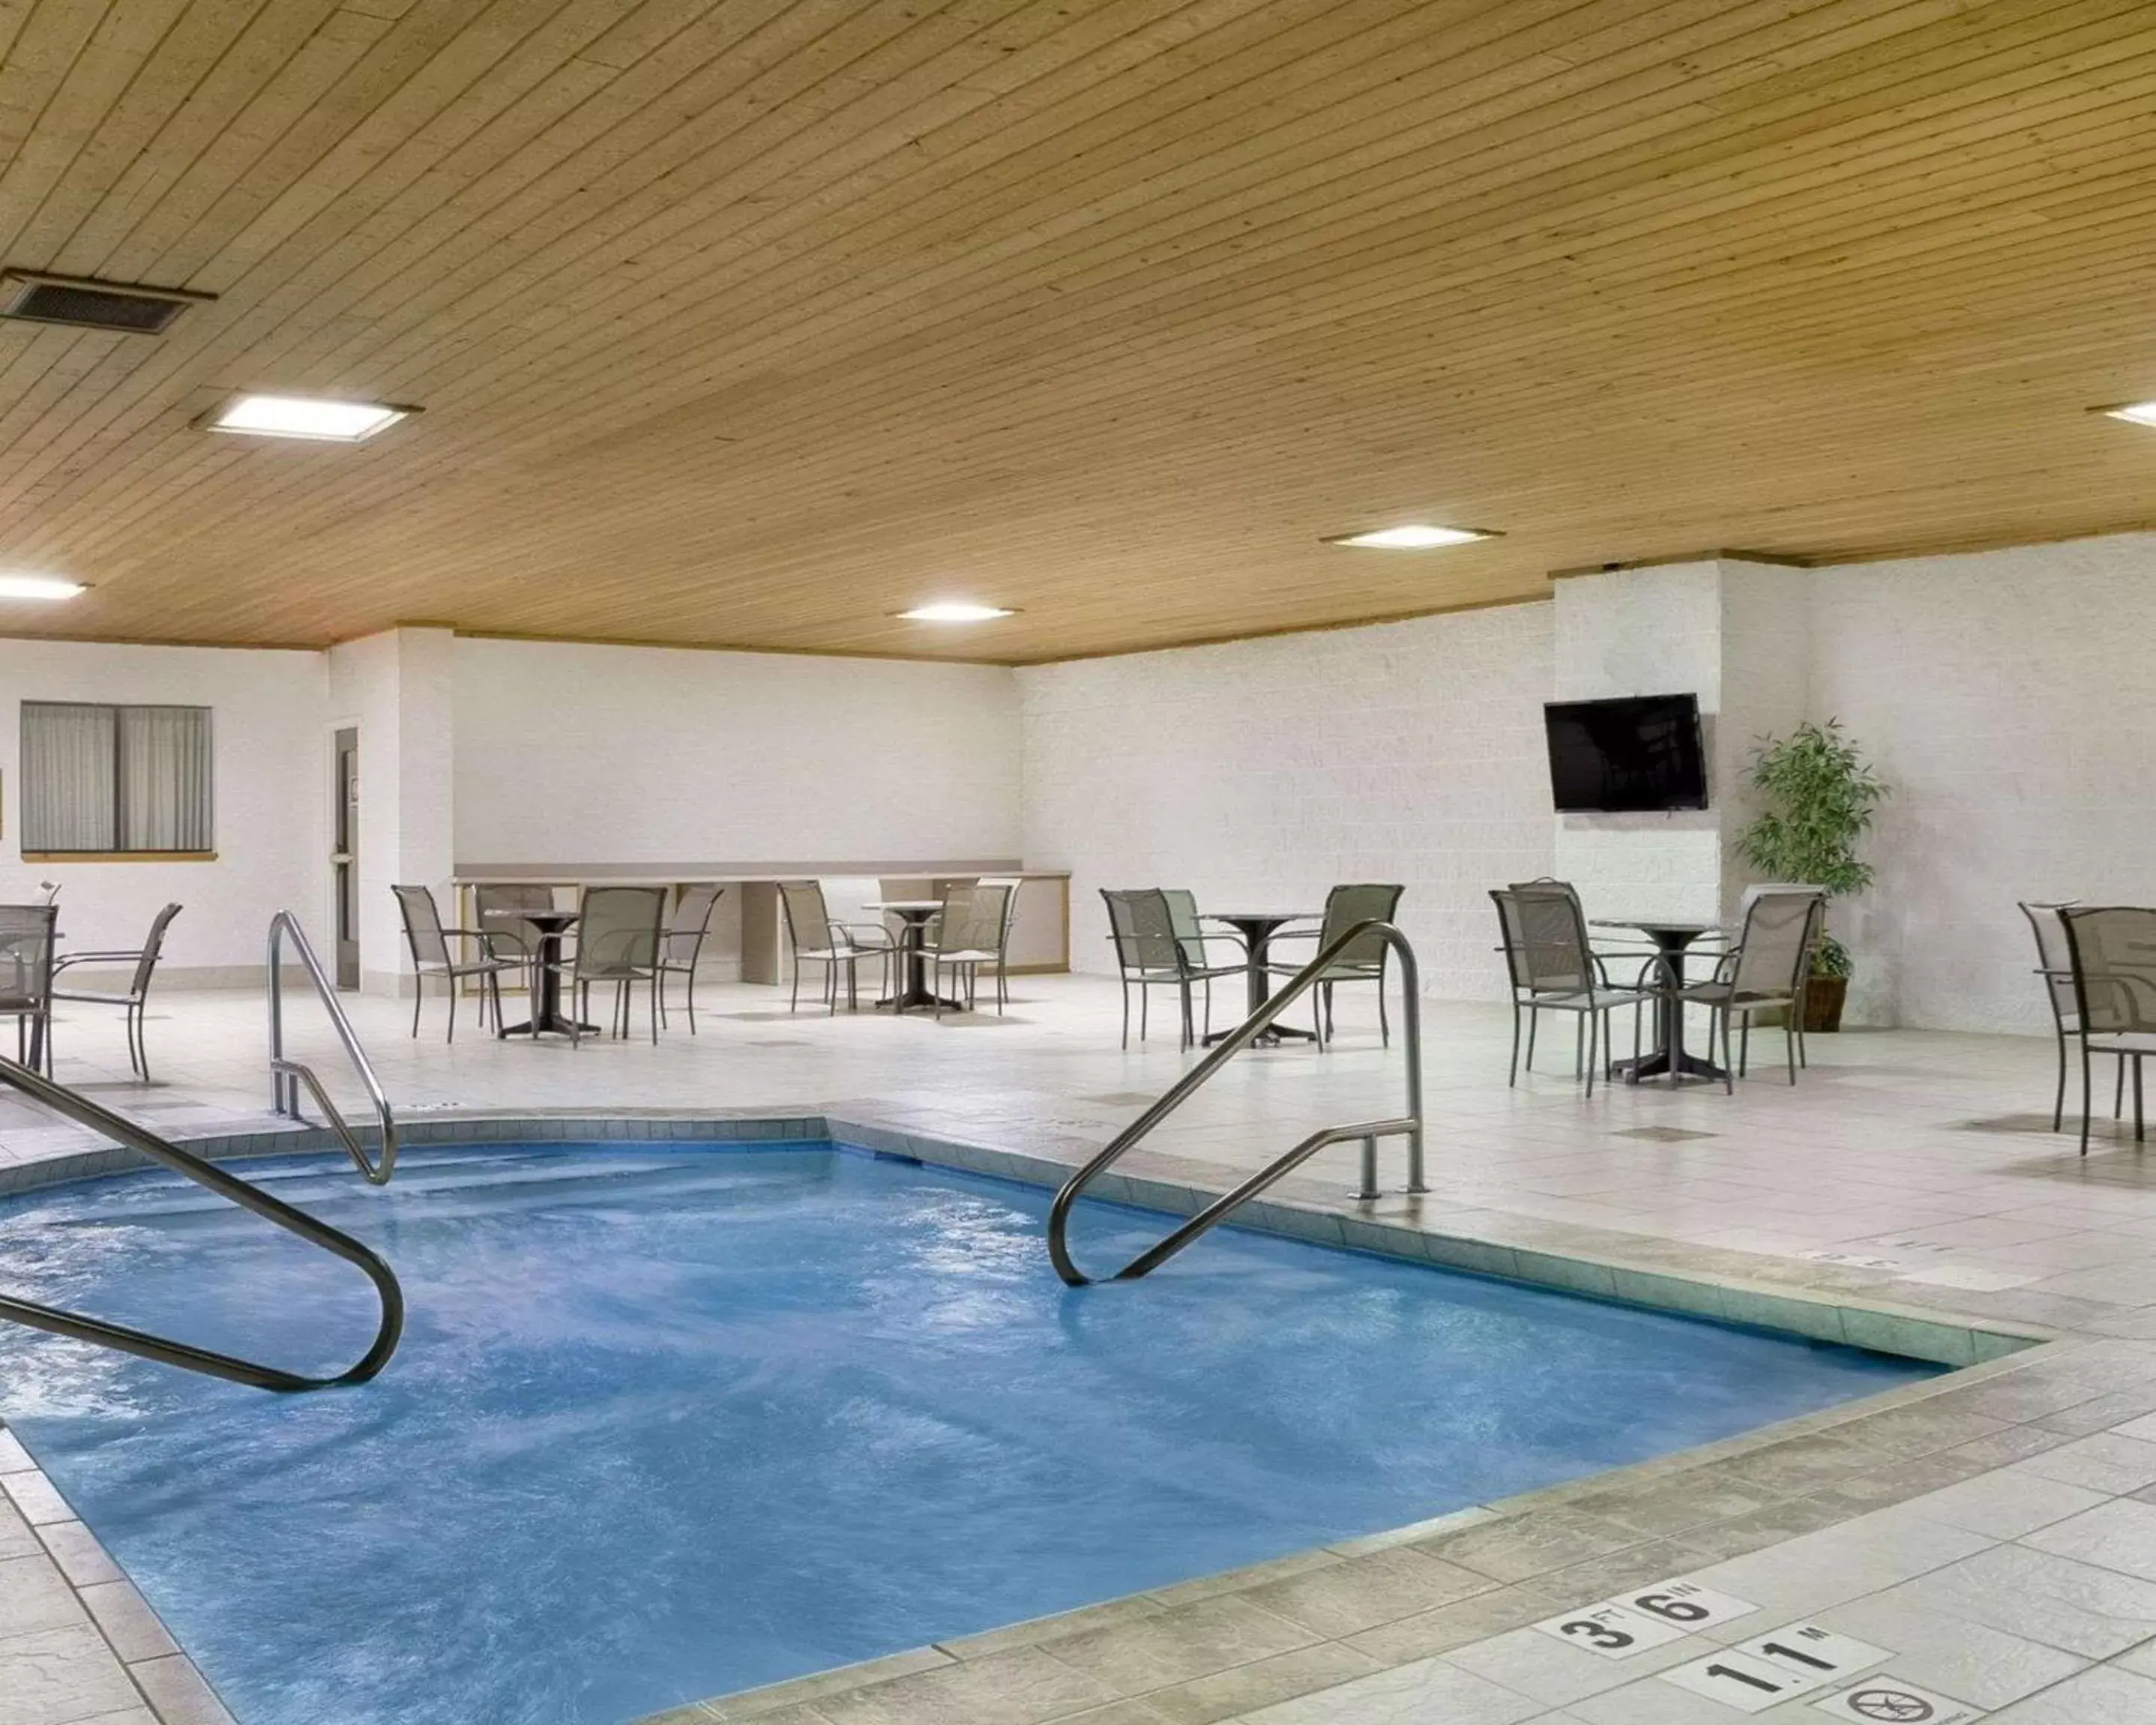 On site, Swimming Pool in Quality Inn Bismarck